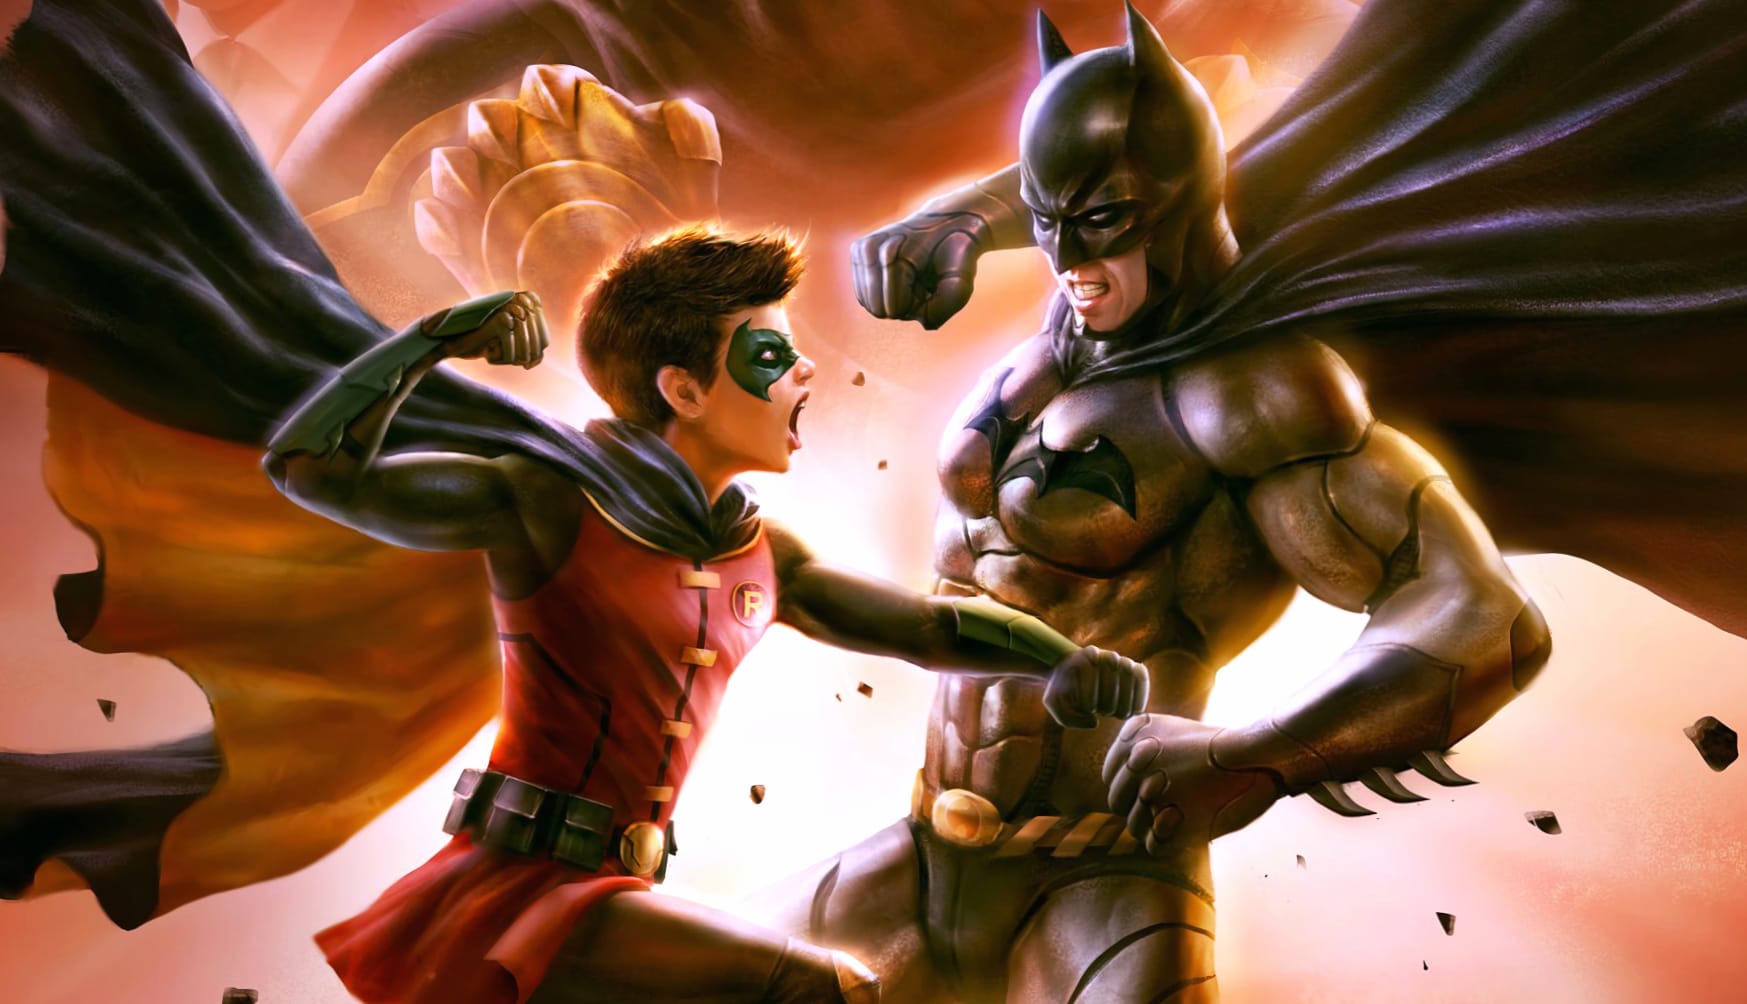 Batman vs. Robin at 1280 x 960 size wallpapers HD quality